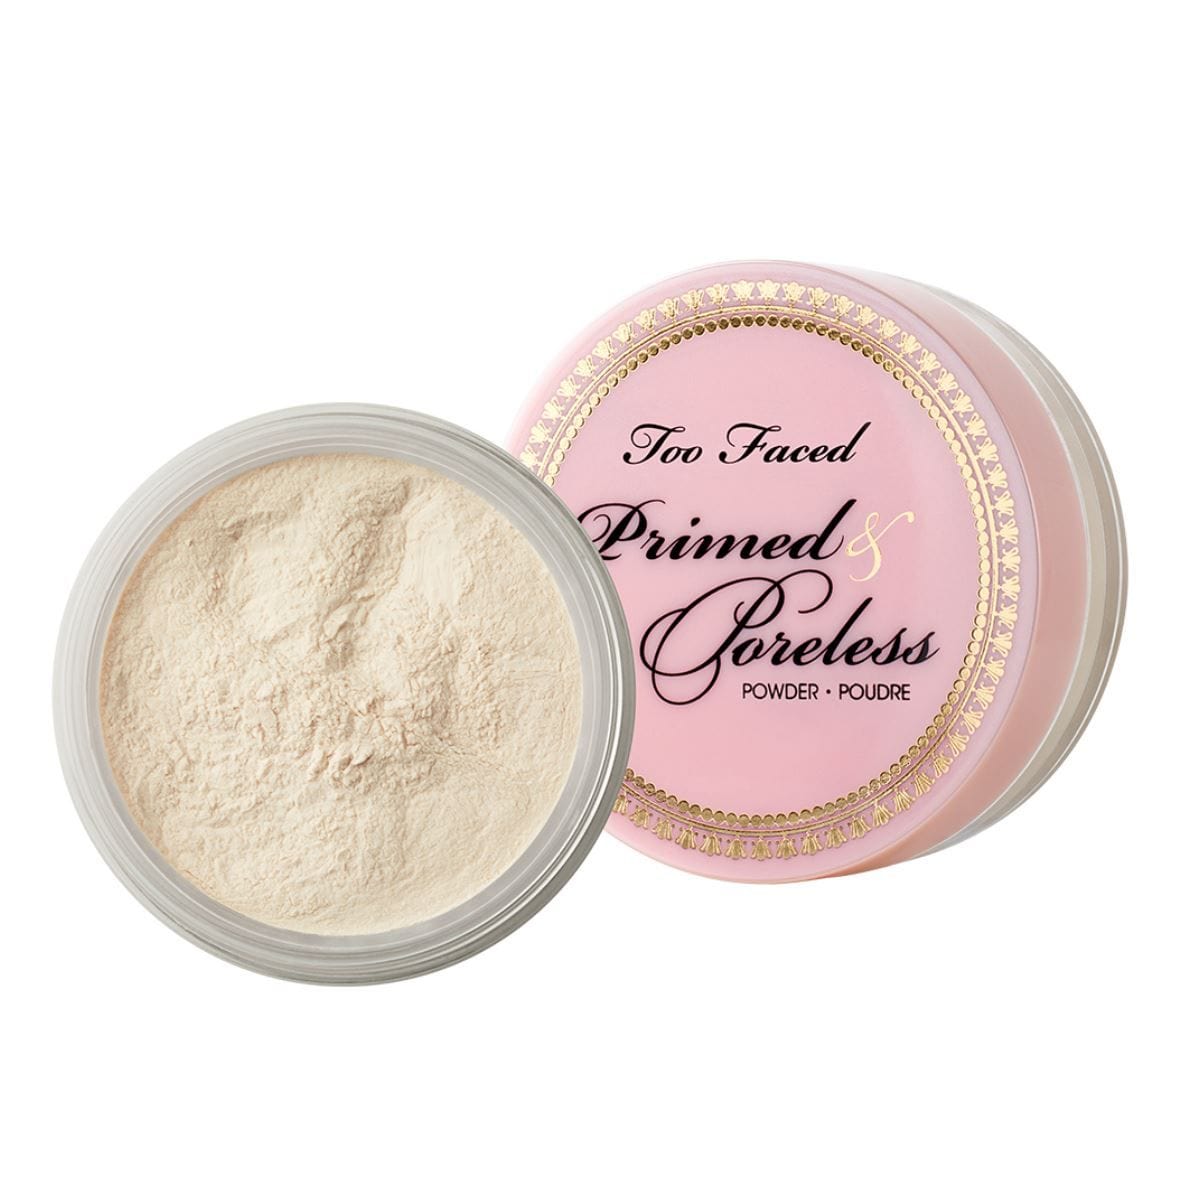 Buy Original Too Faced Primed & Poreless Powder - Online at Best Price in Pakistan